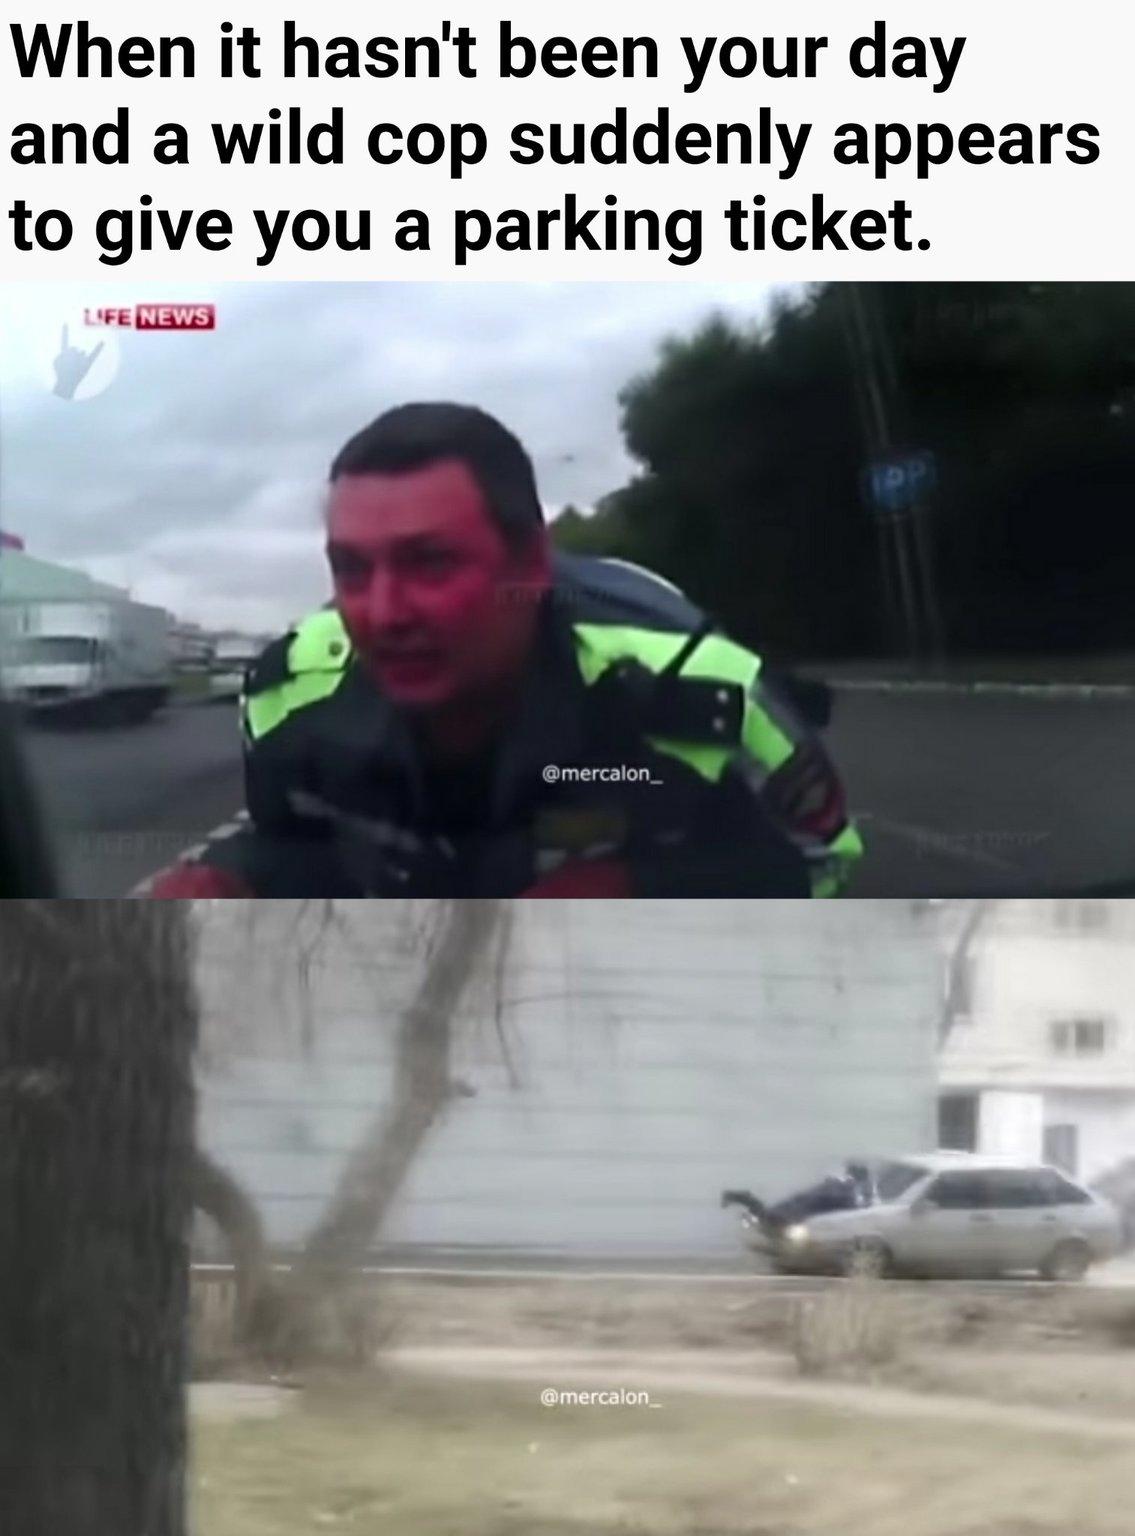 A wild cop suddenly appears - meme